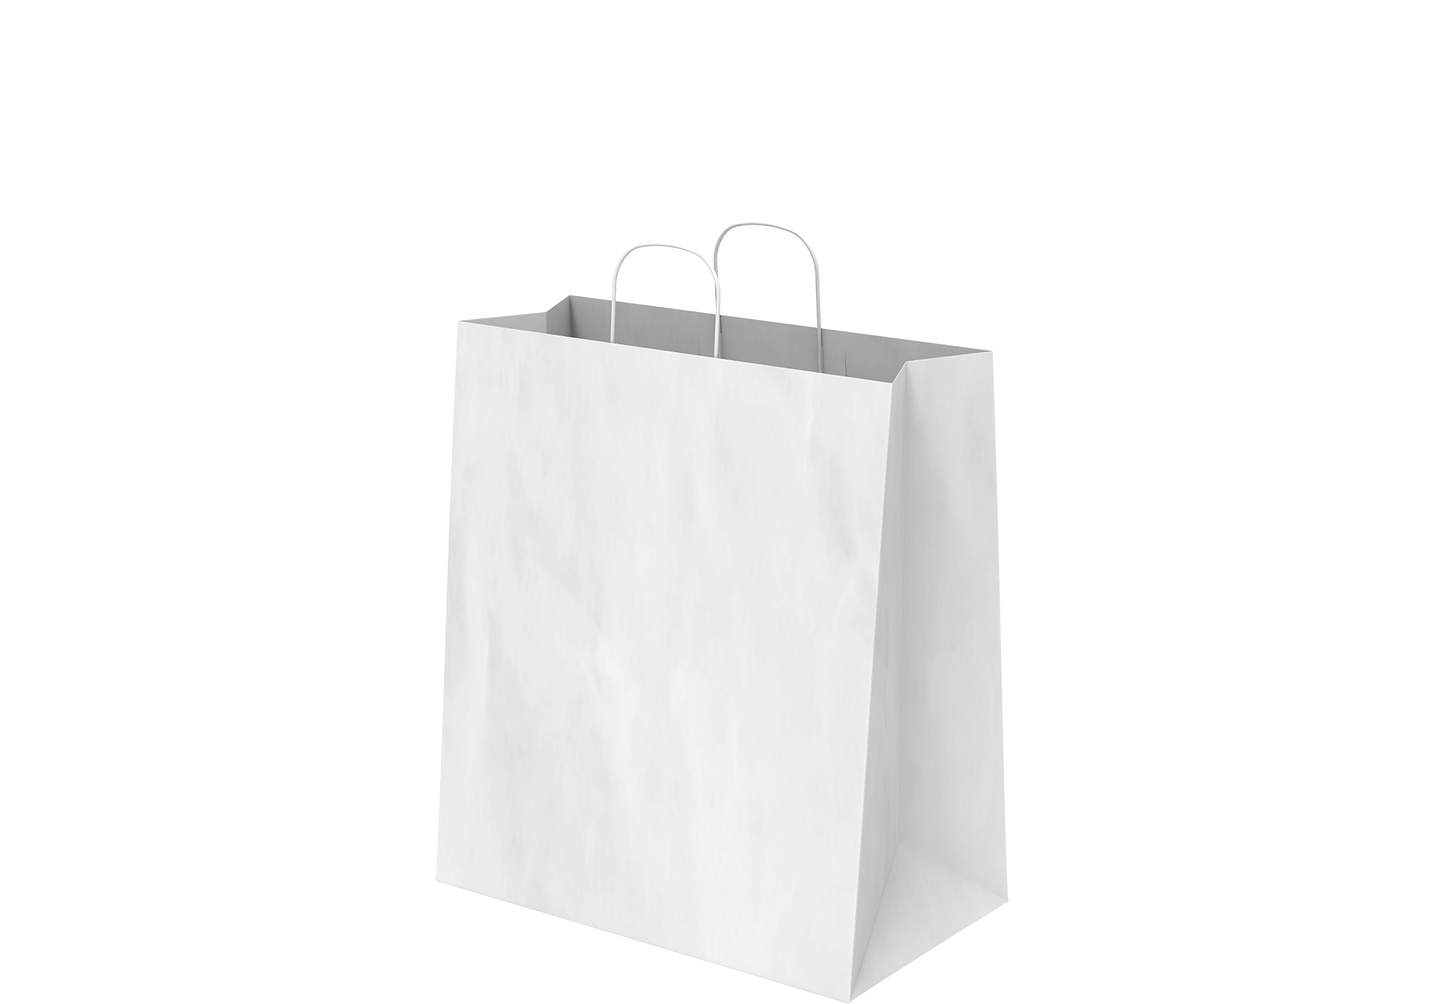 Shopping Paper Bags Plain White 31 x 35 x 18 cm - 25 Pcs.